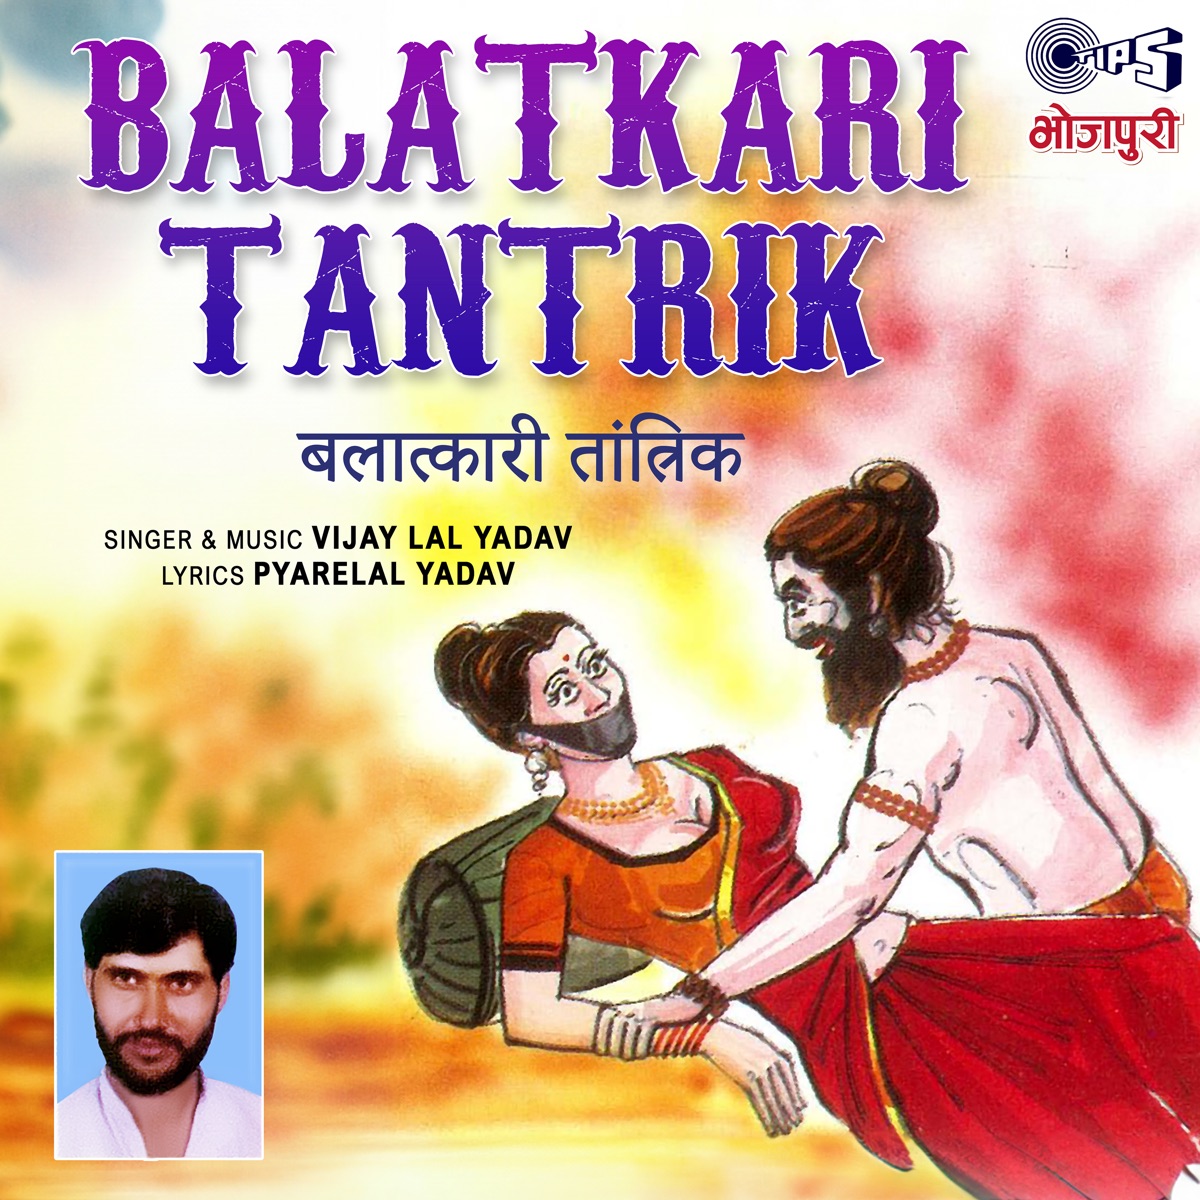 Balatkari picture